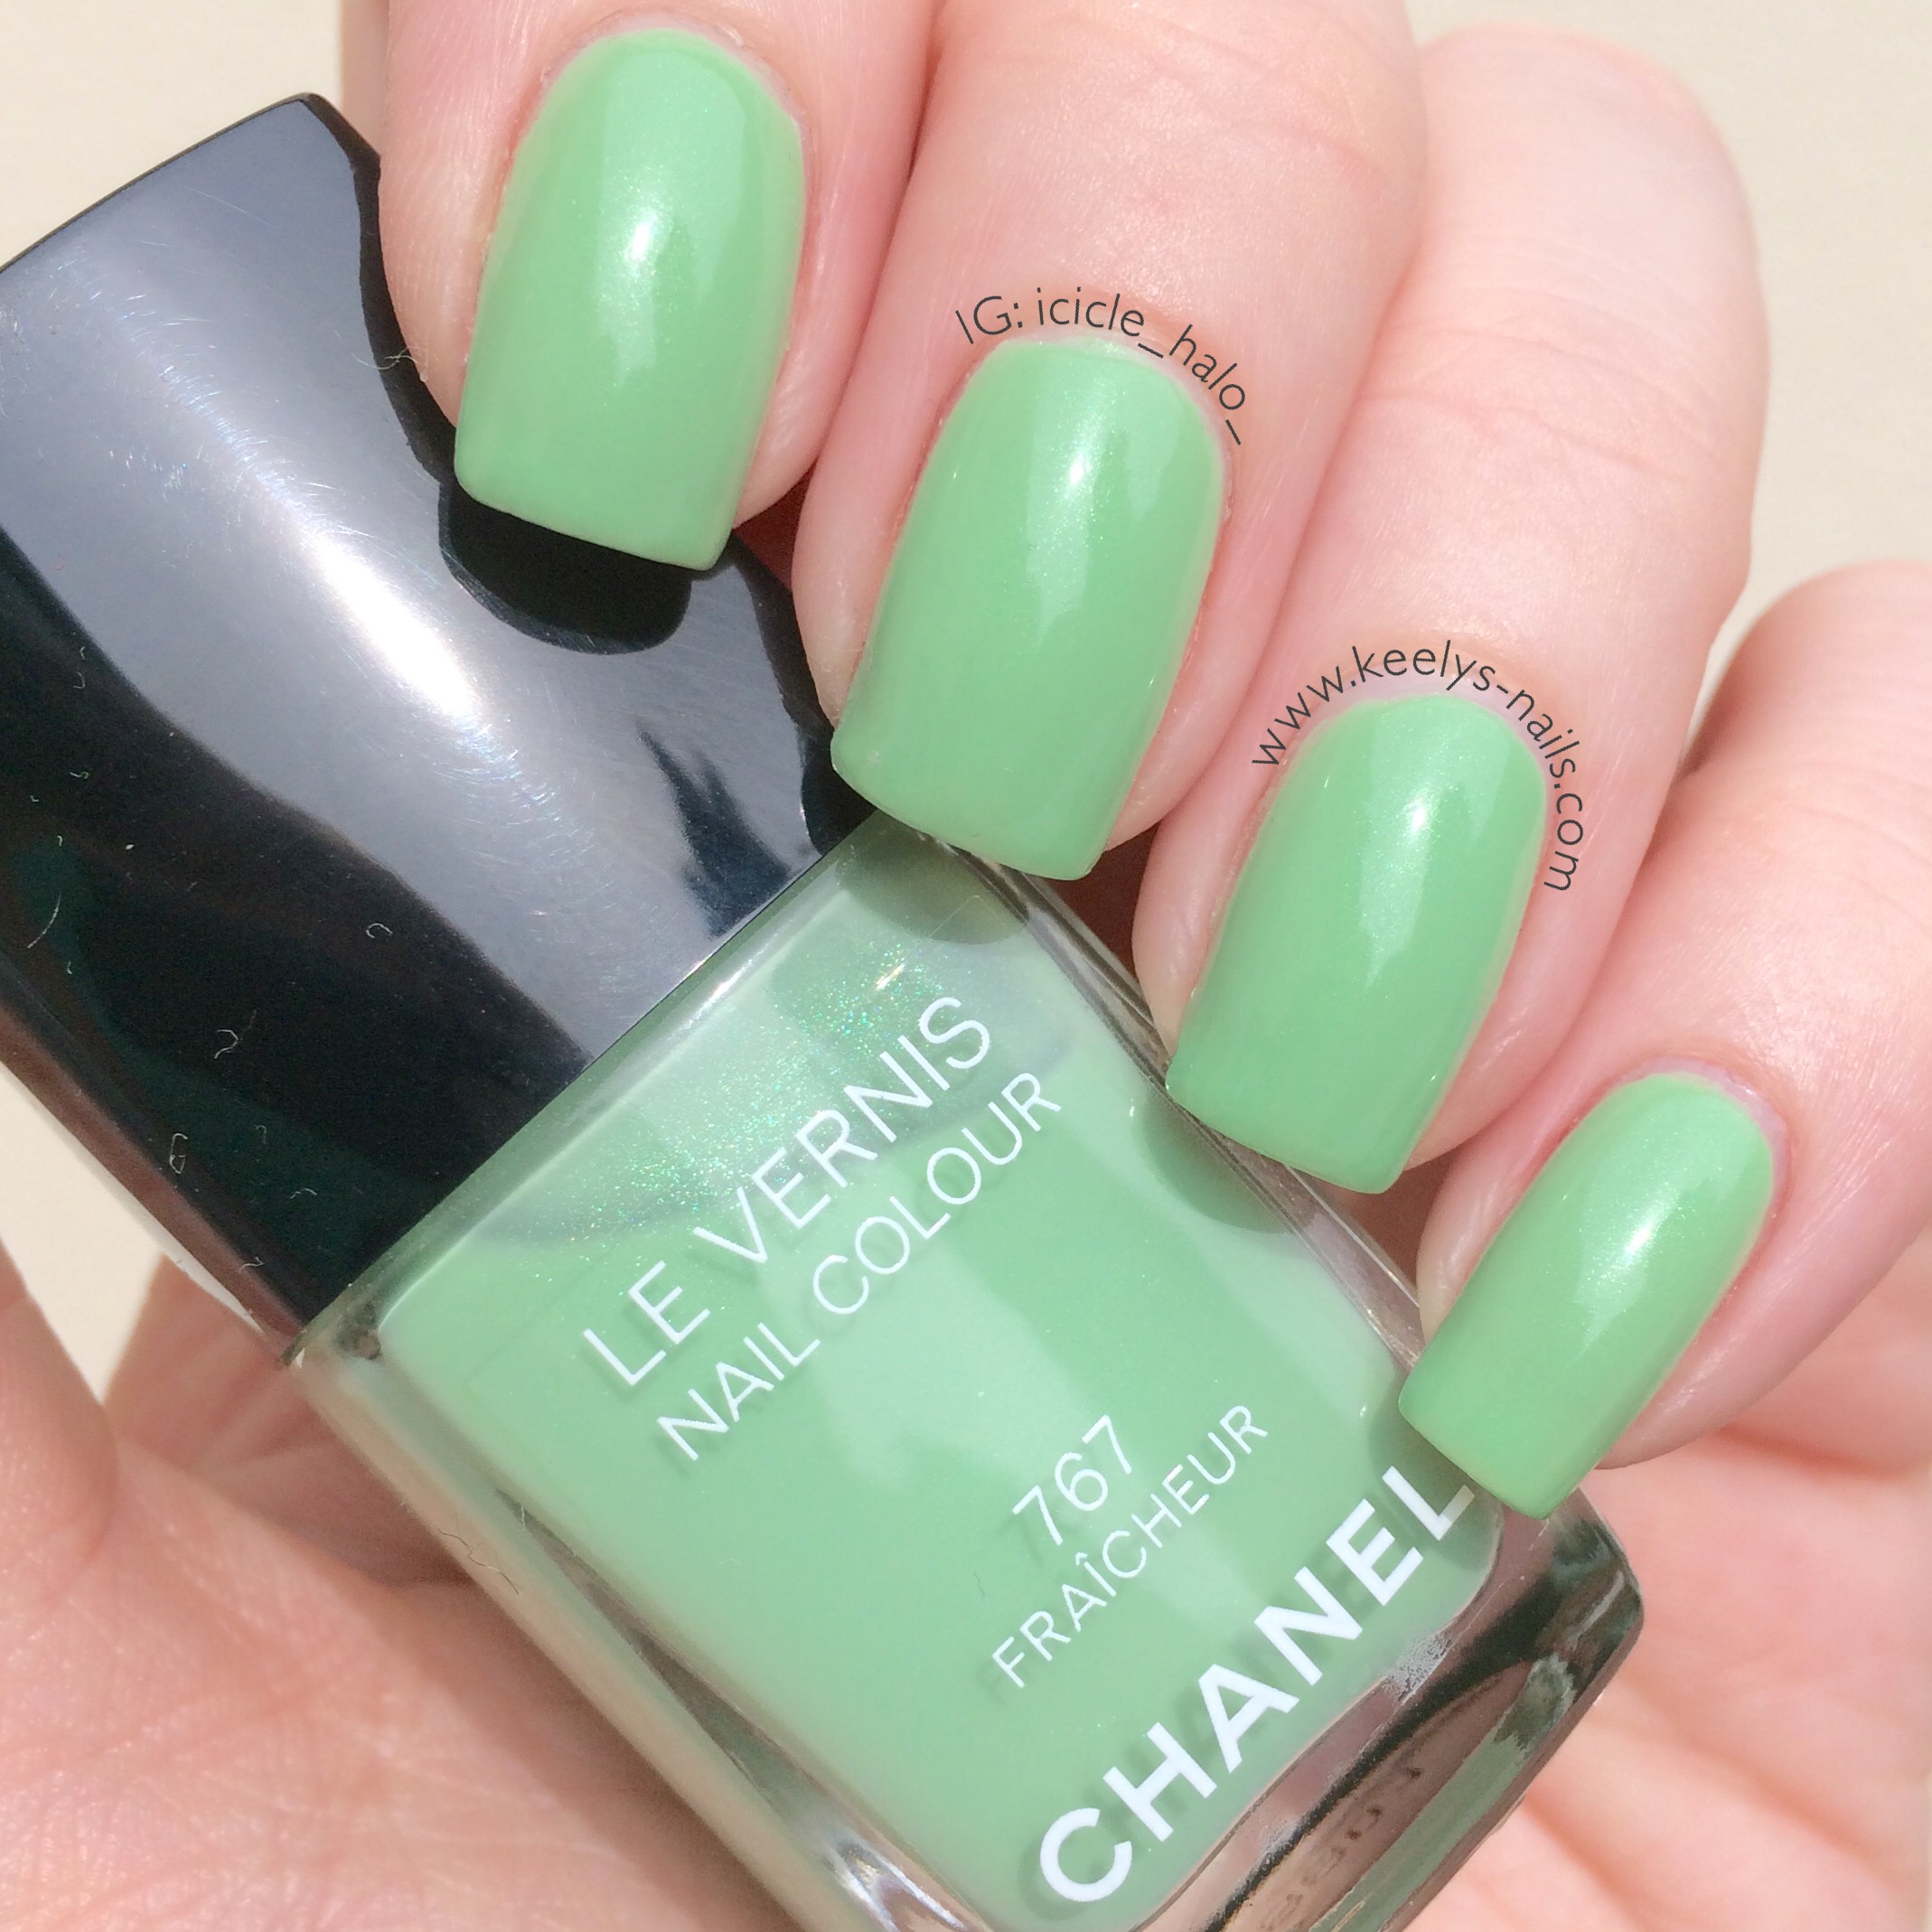 Chanel Fraicheur swatch, a soft pale green.